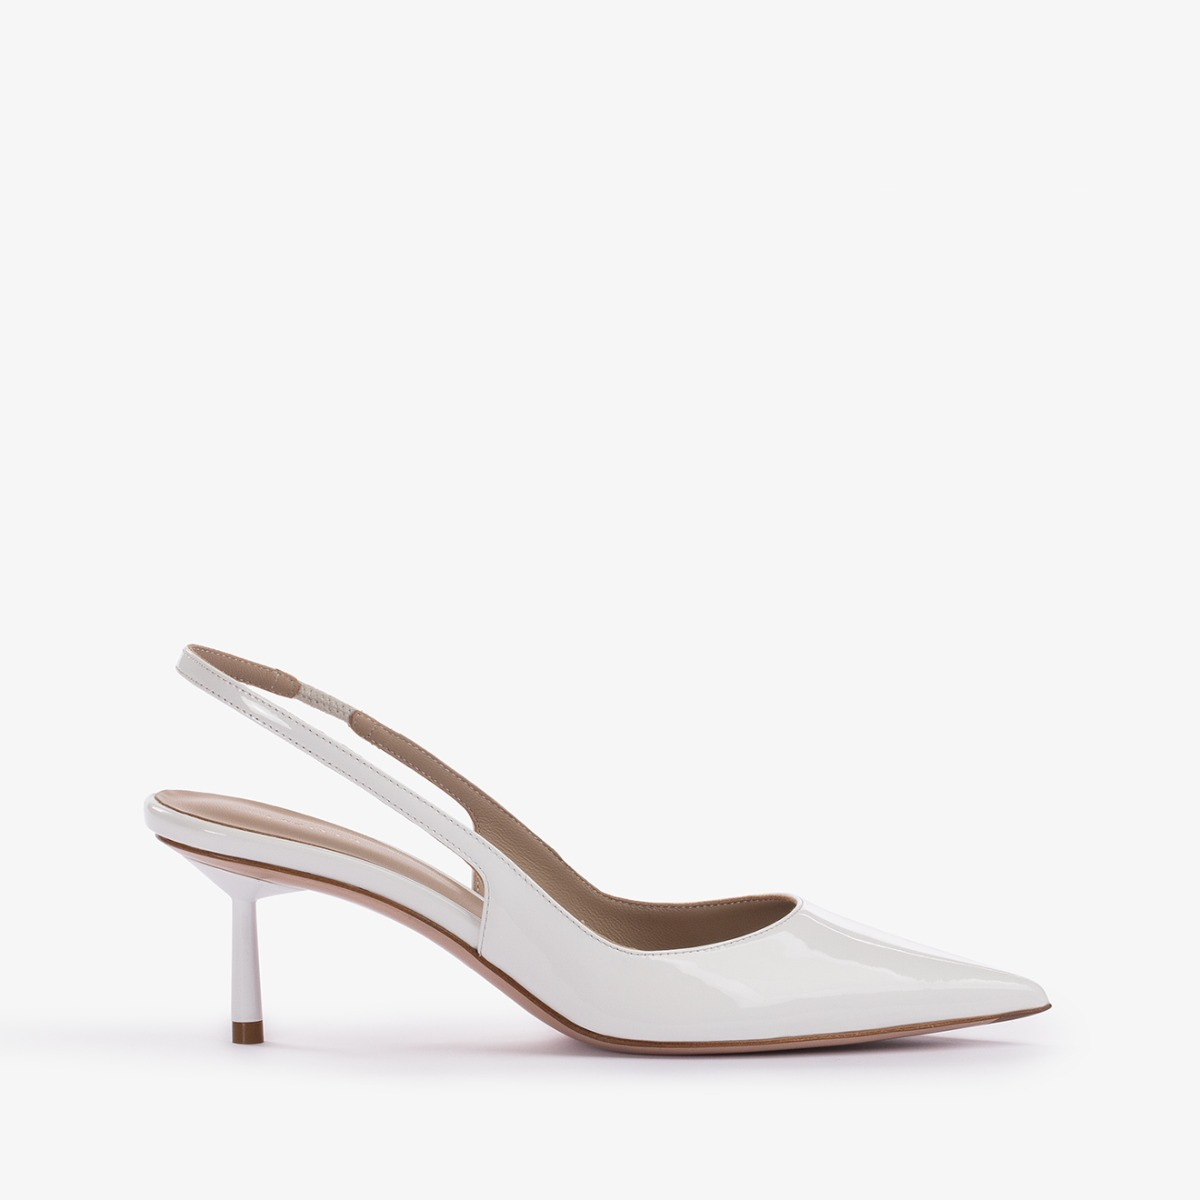 Pumps and wedding sandals | Le Silla shoes